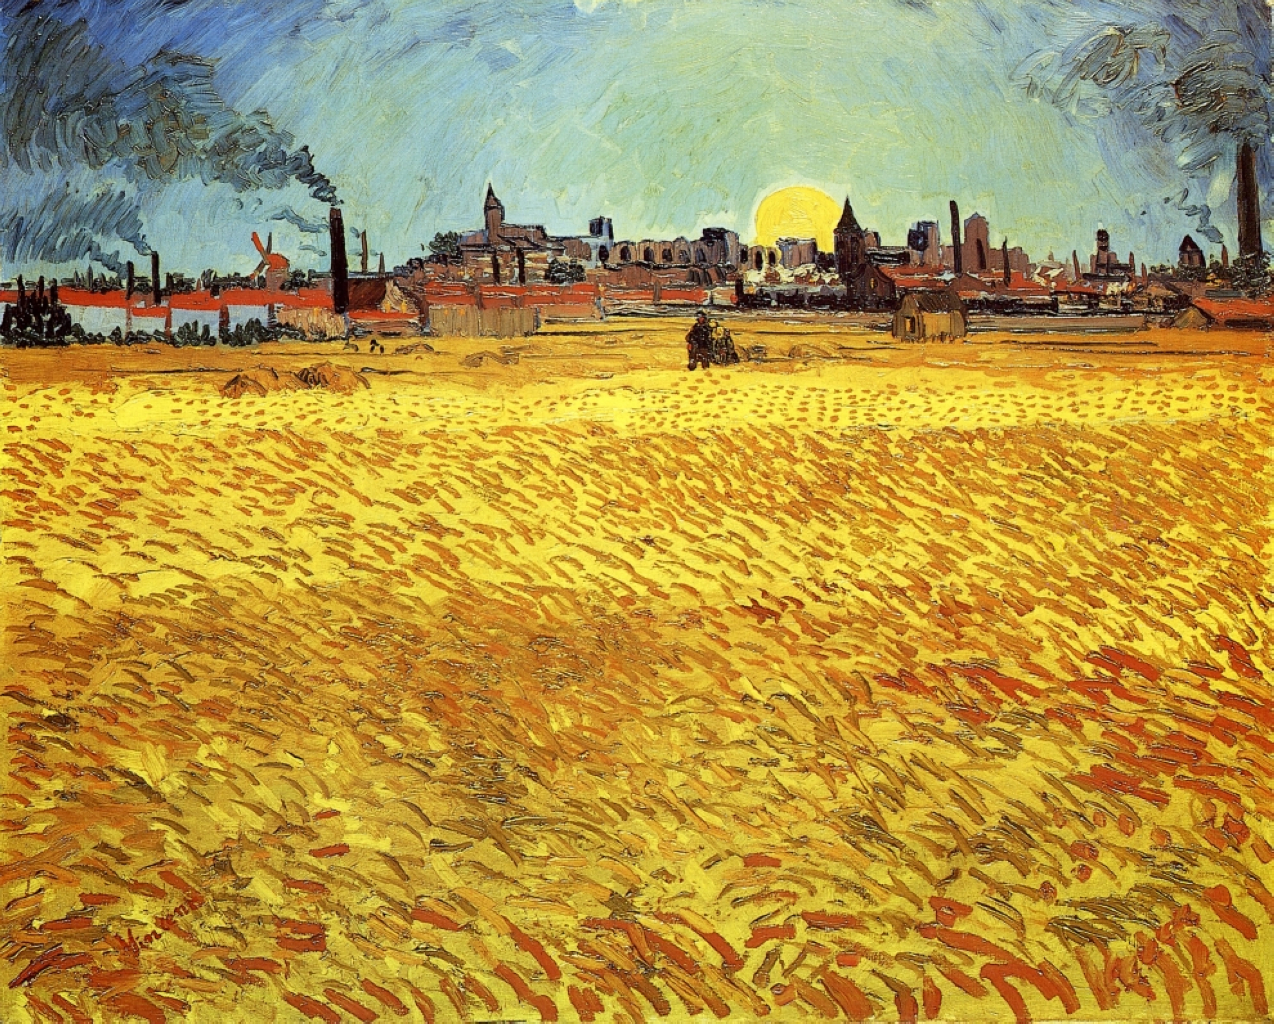 Летний вечер, пшеничное поле в лучах заходящего солнца by Винсе́нт Виллем Ван Гог - 1888 - 188 x 231 см 